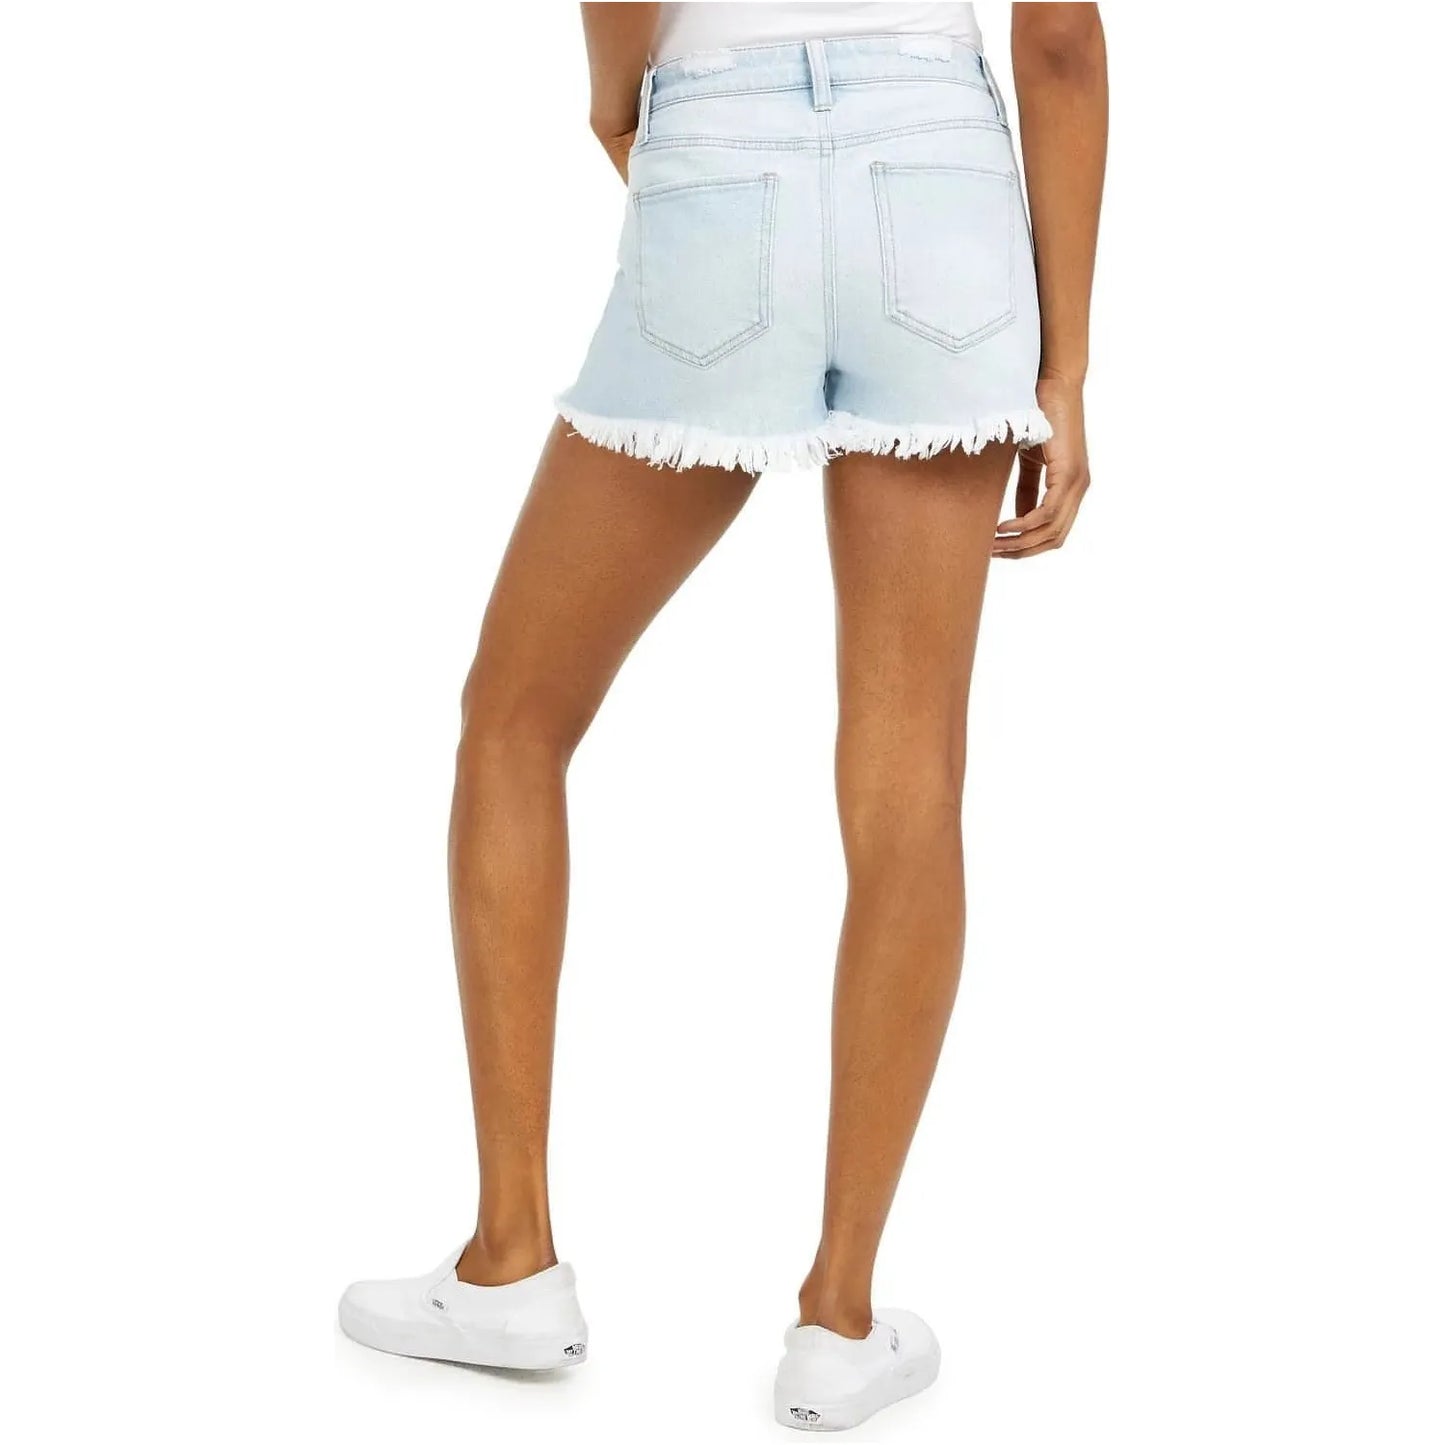 Tinseltown Juniors Frayed Denim Shorts, Blue, Size: 9 - Brandat Outlet